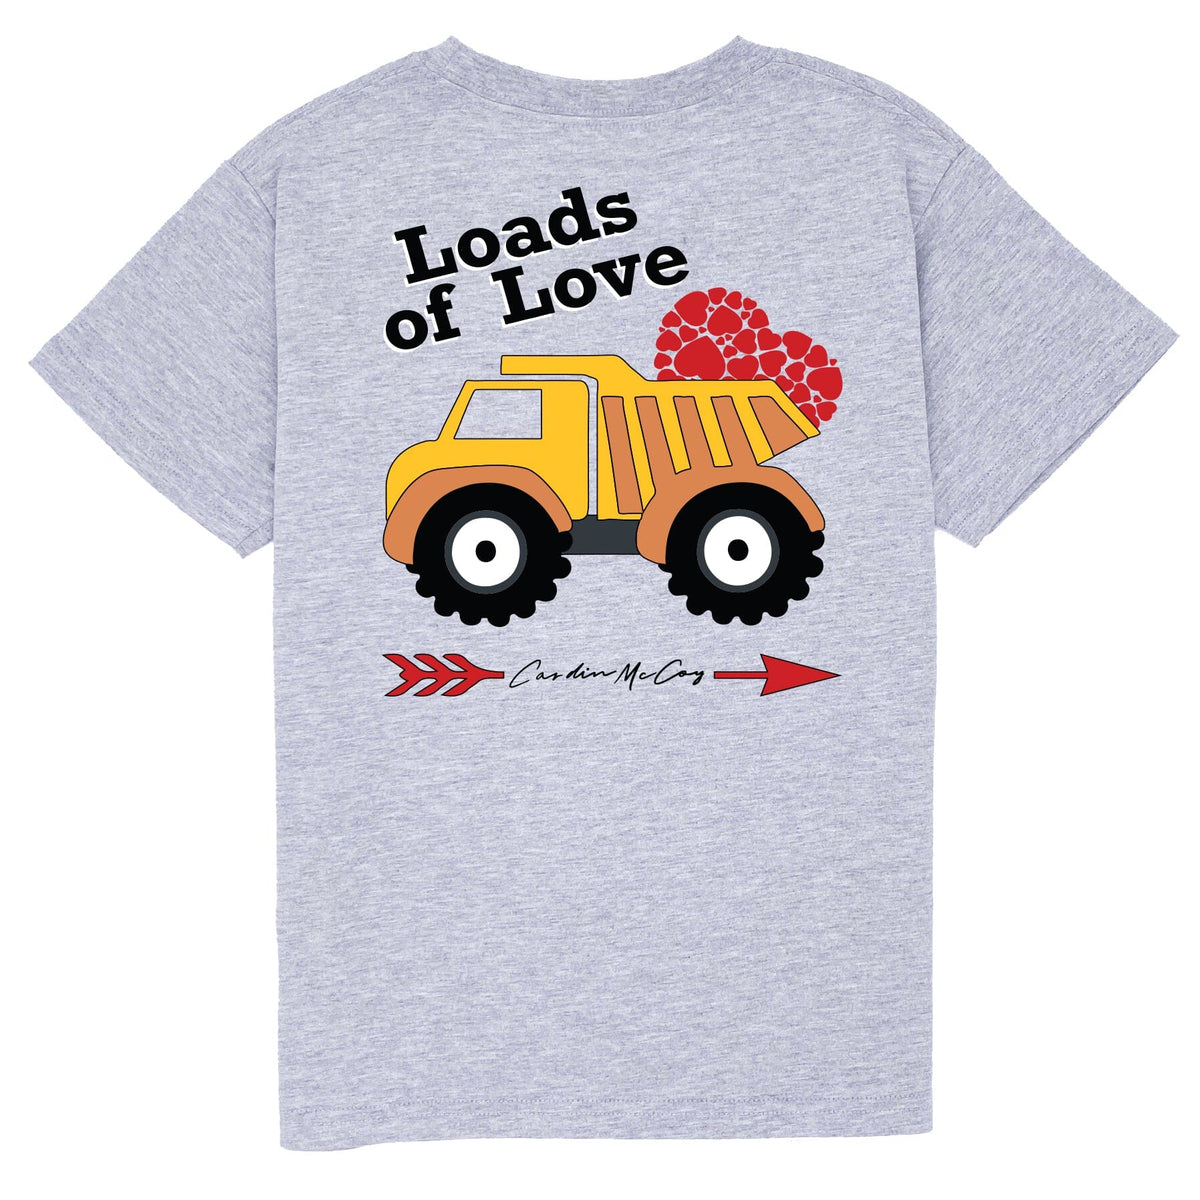 Kids' Loads of Love Short Sleeve Pocket Tee Short Sleeve T-Shirt Cardin McCoy XXS (2/3) Heather Gray 